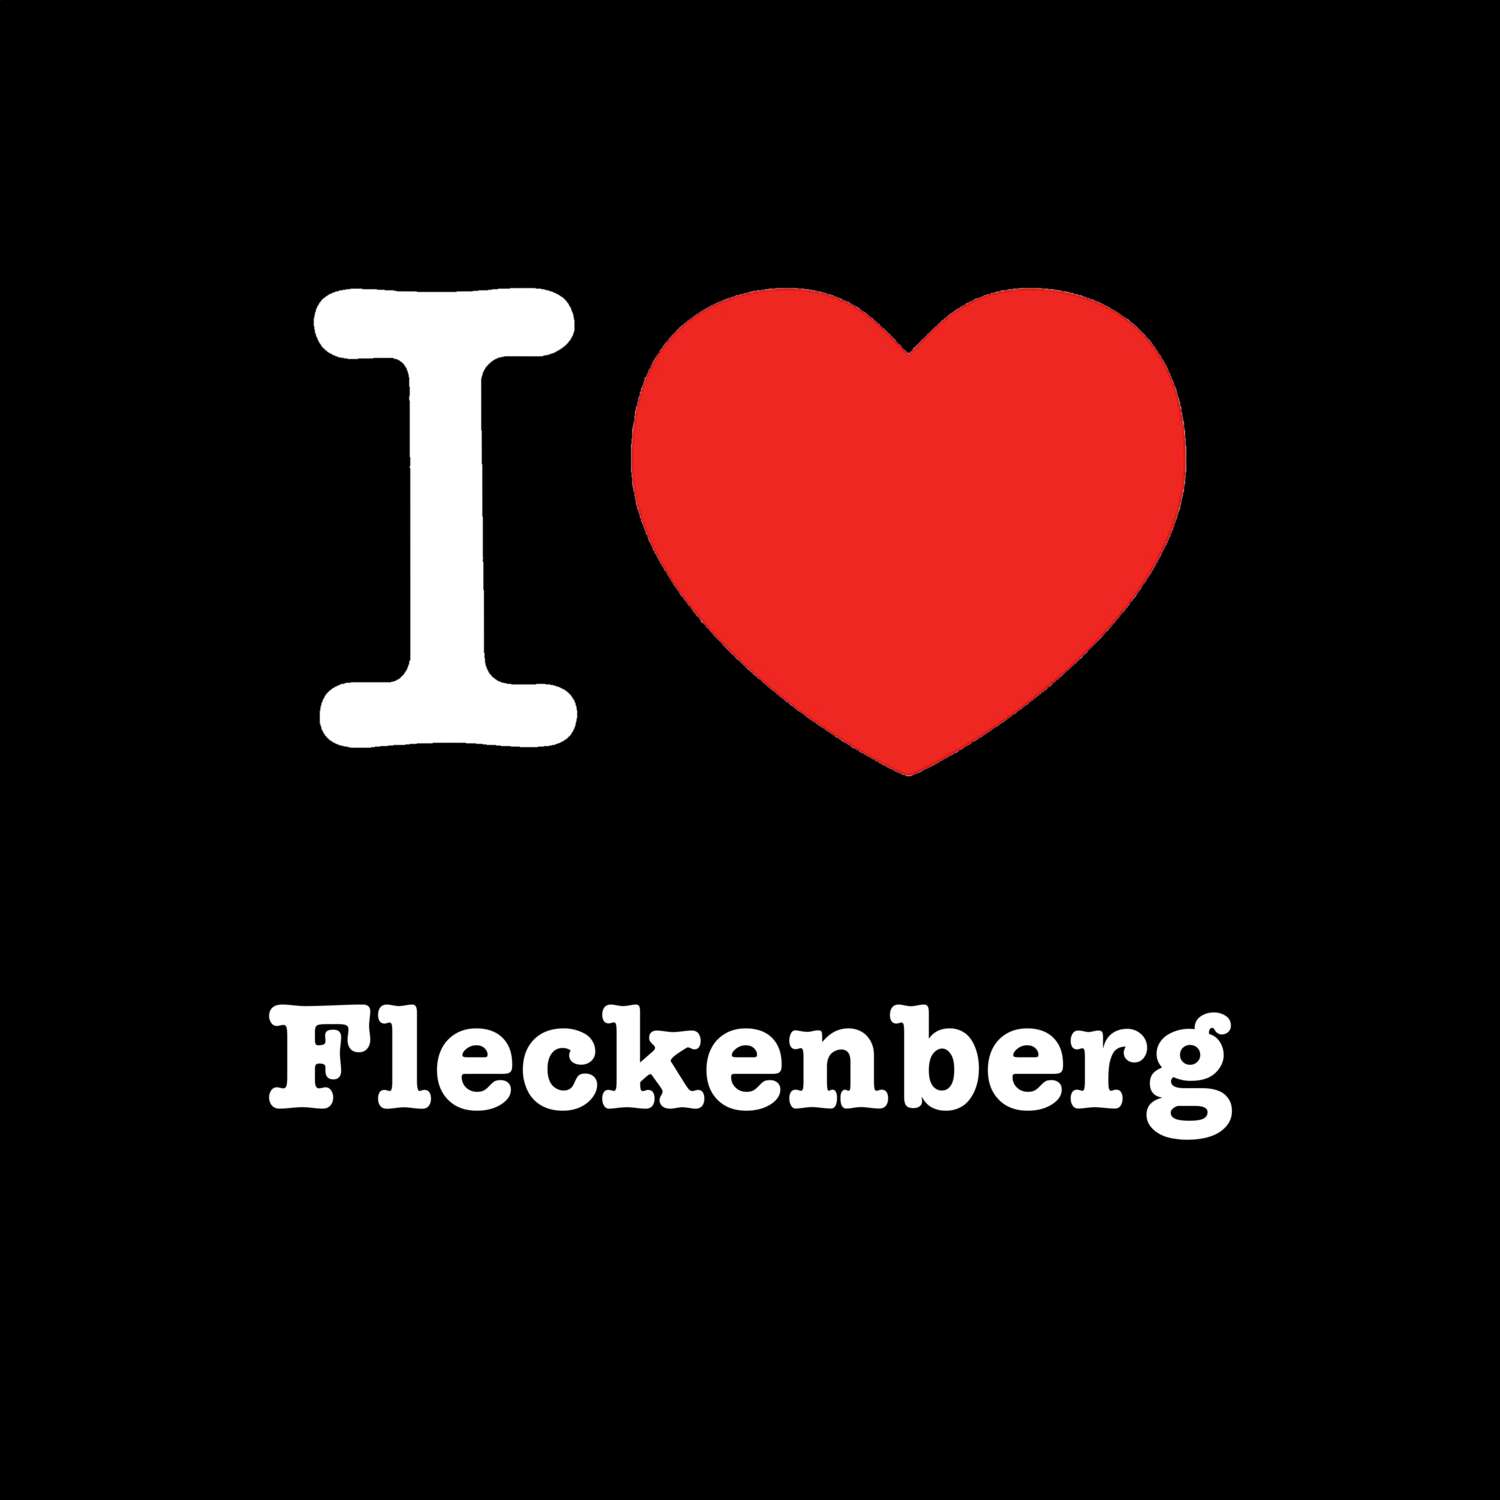 Fleckenberg T-Shirt »I love«